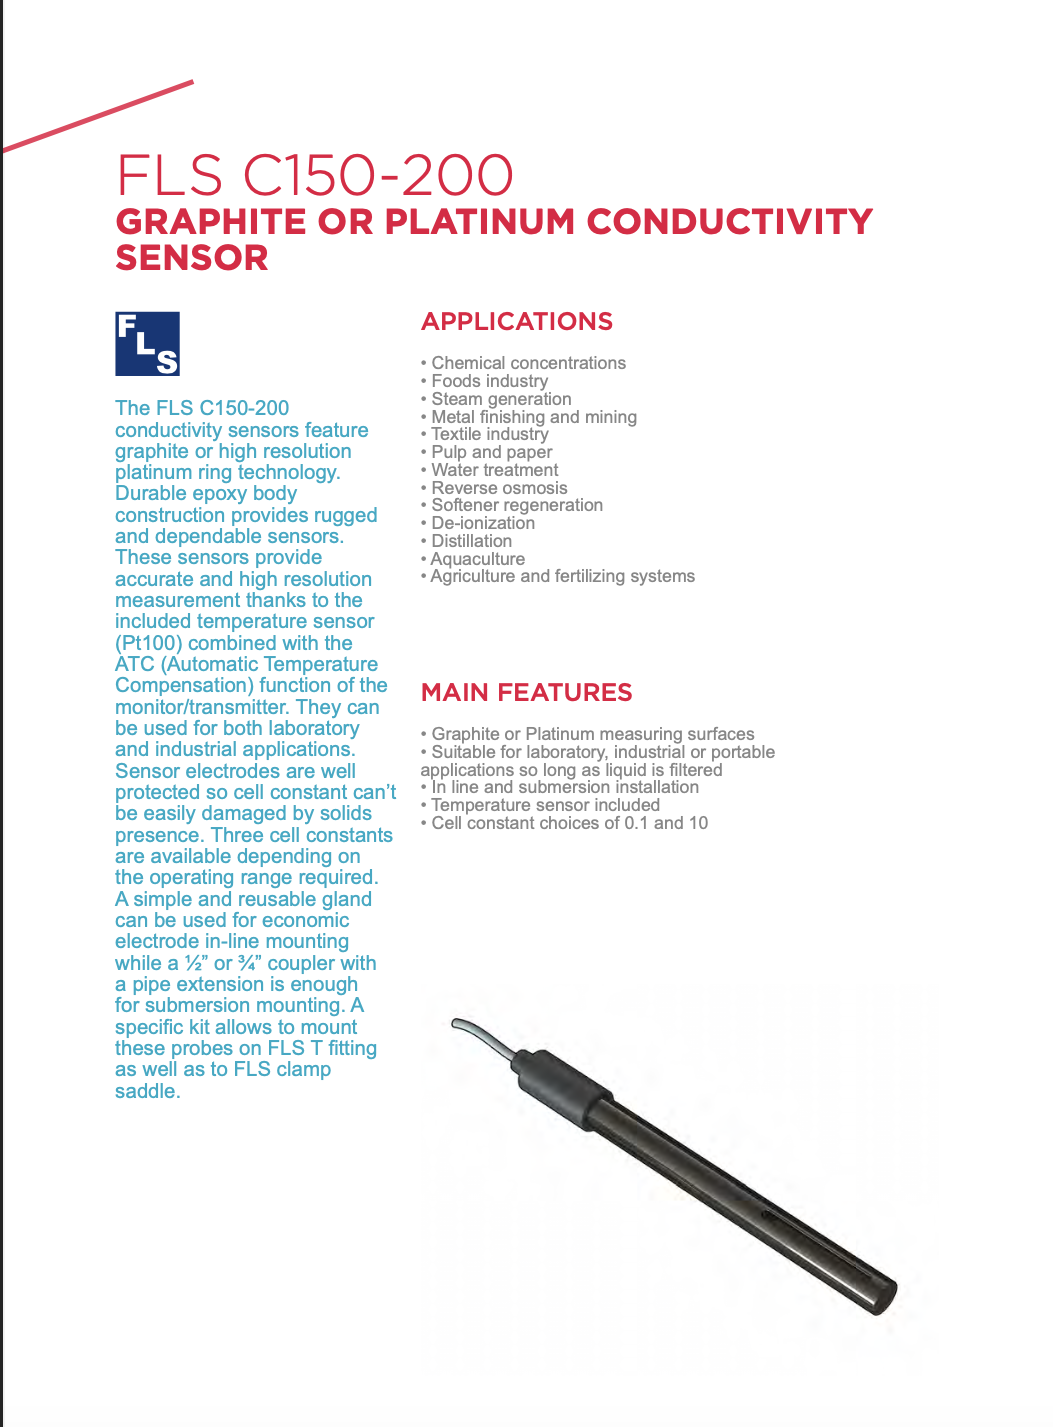 Graphite or Platinum Conductivity Sensor